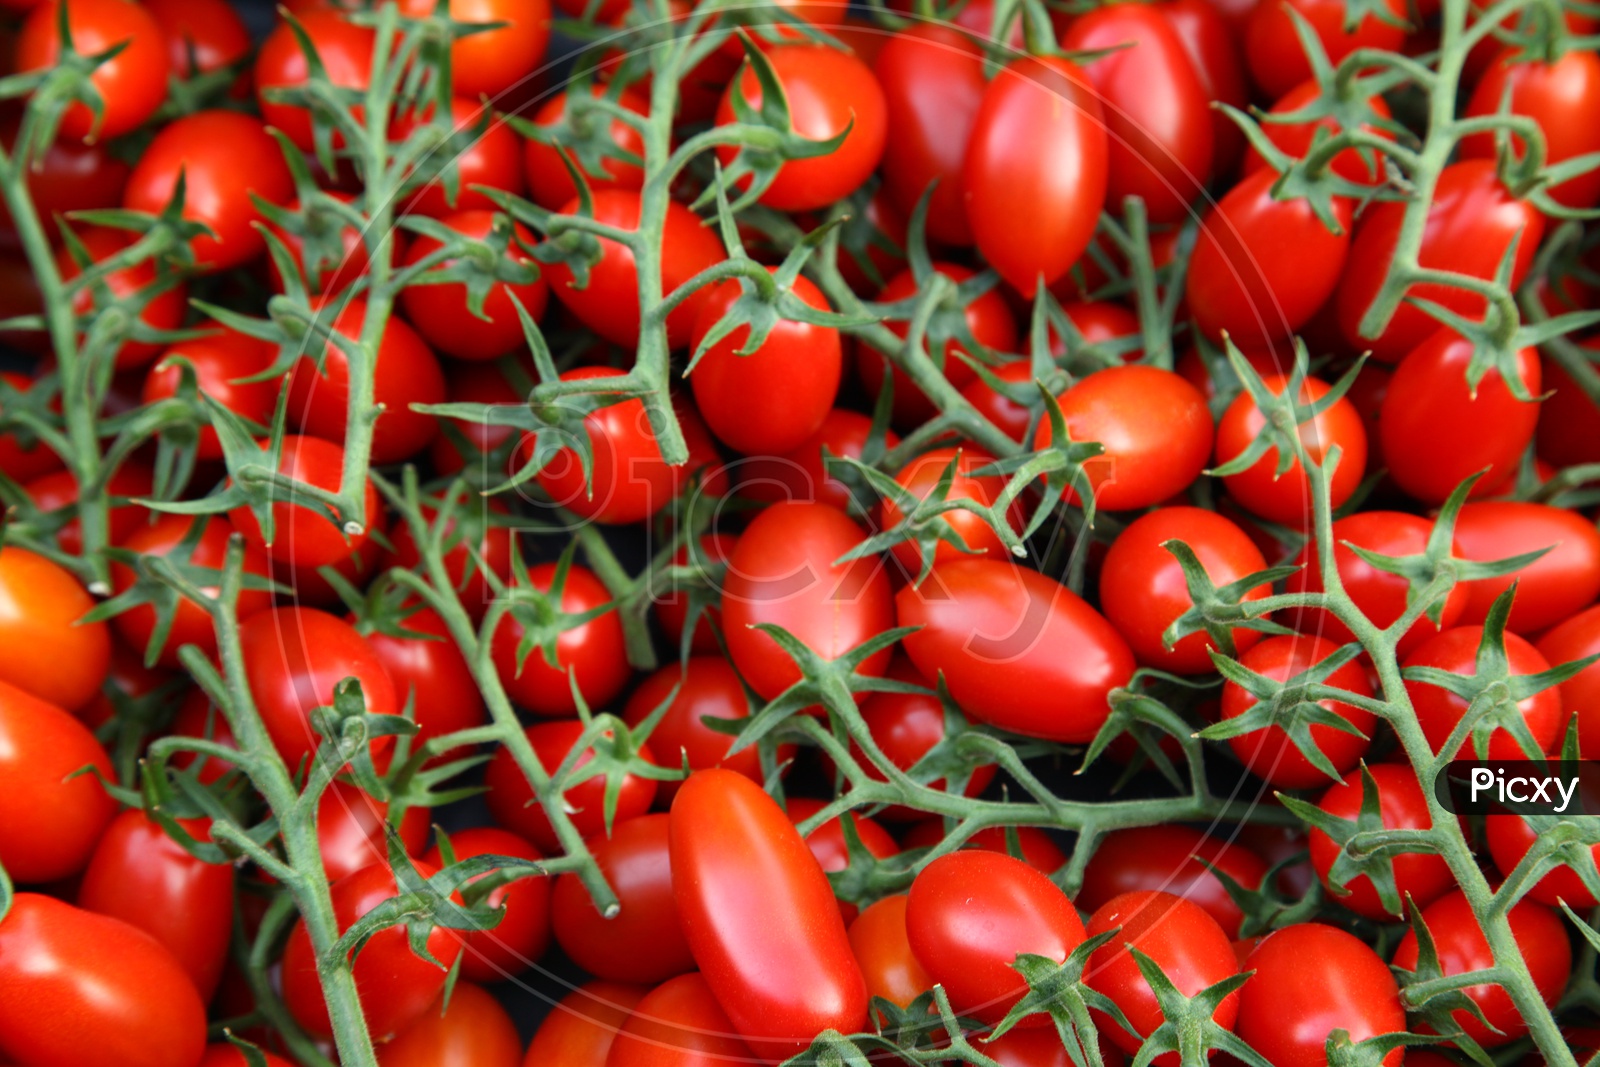 Hybrid tomatoes